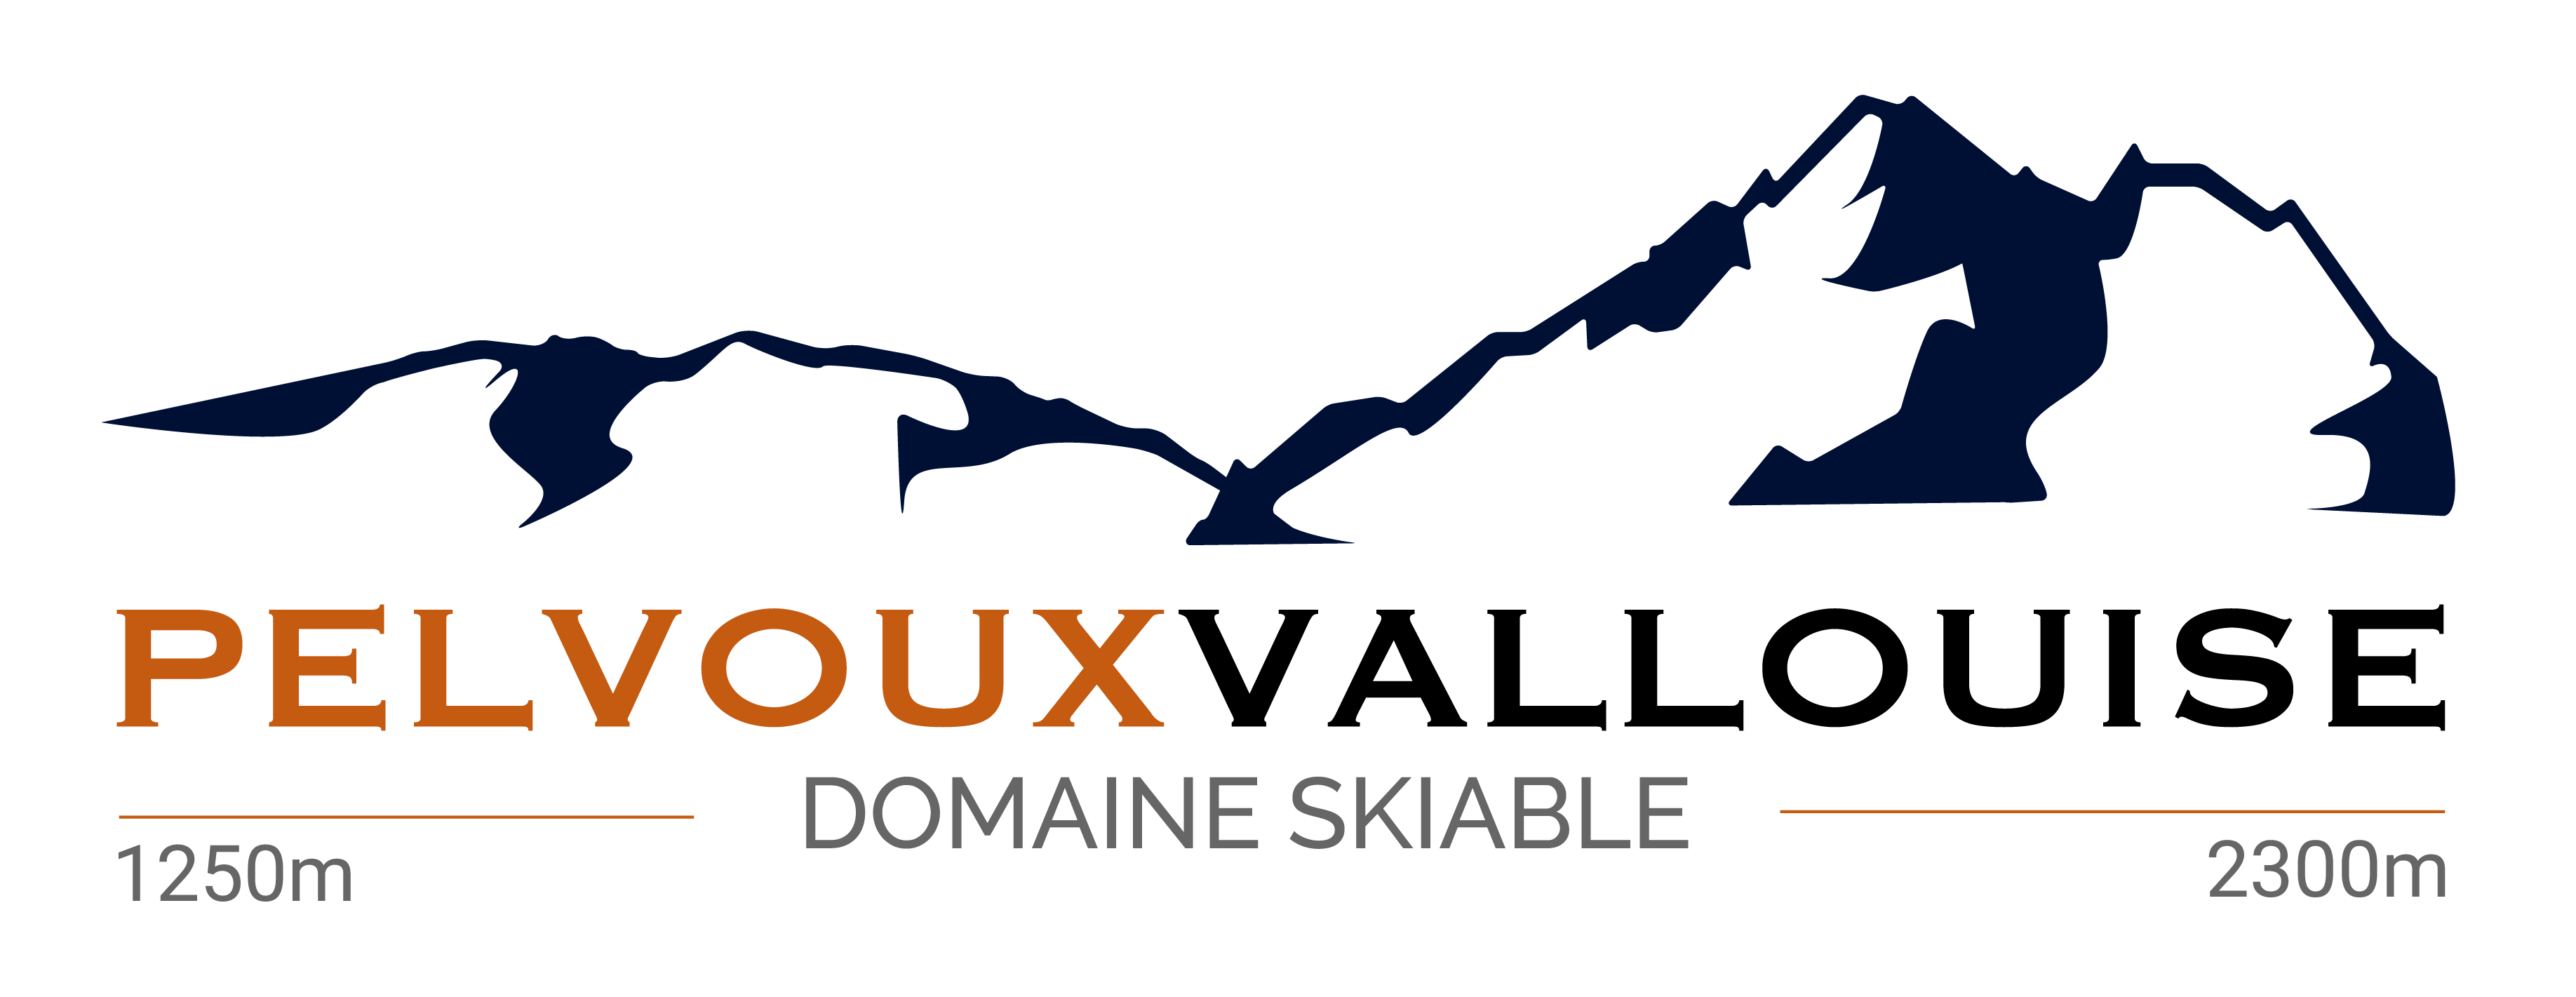 Pelvoux Vallouise Domaine Skiable